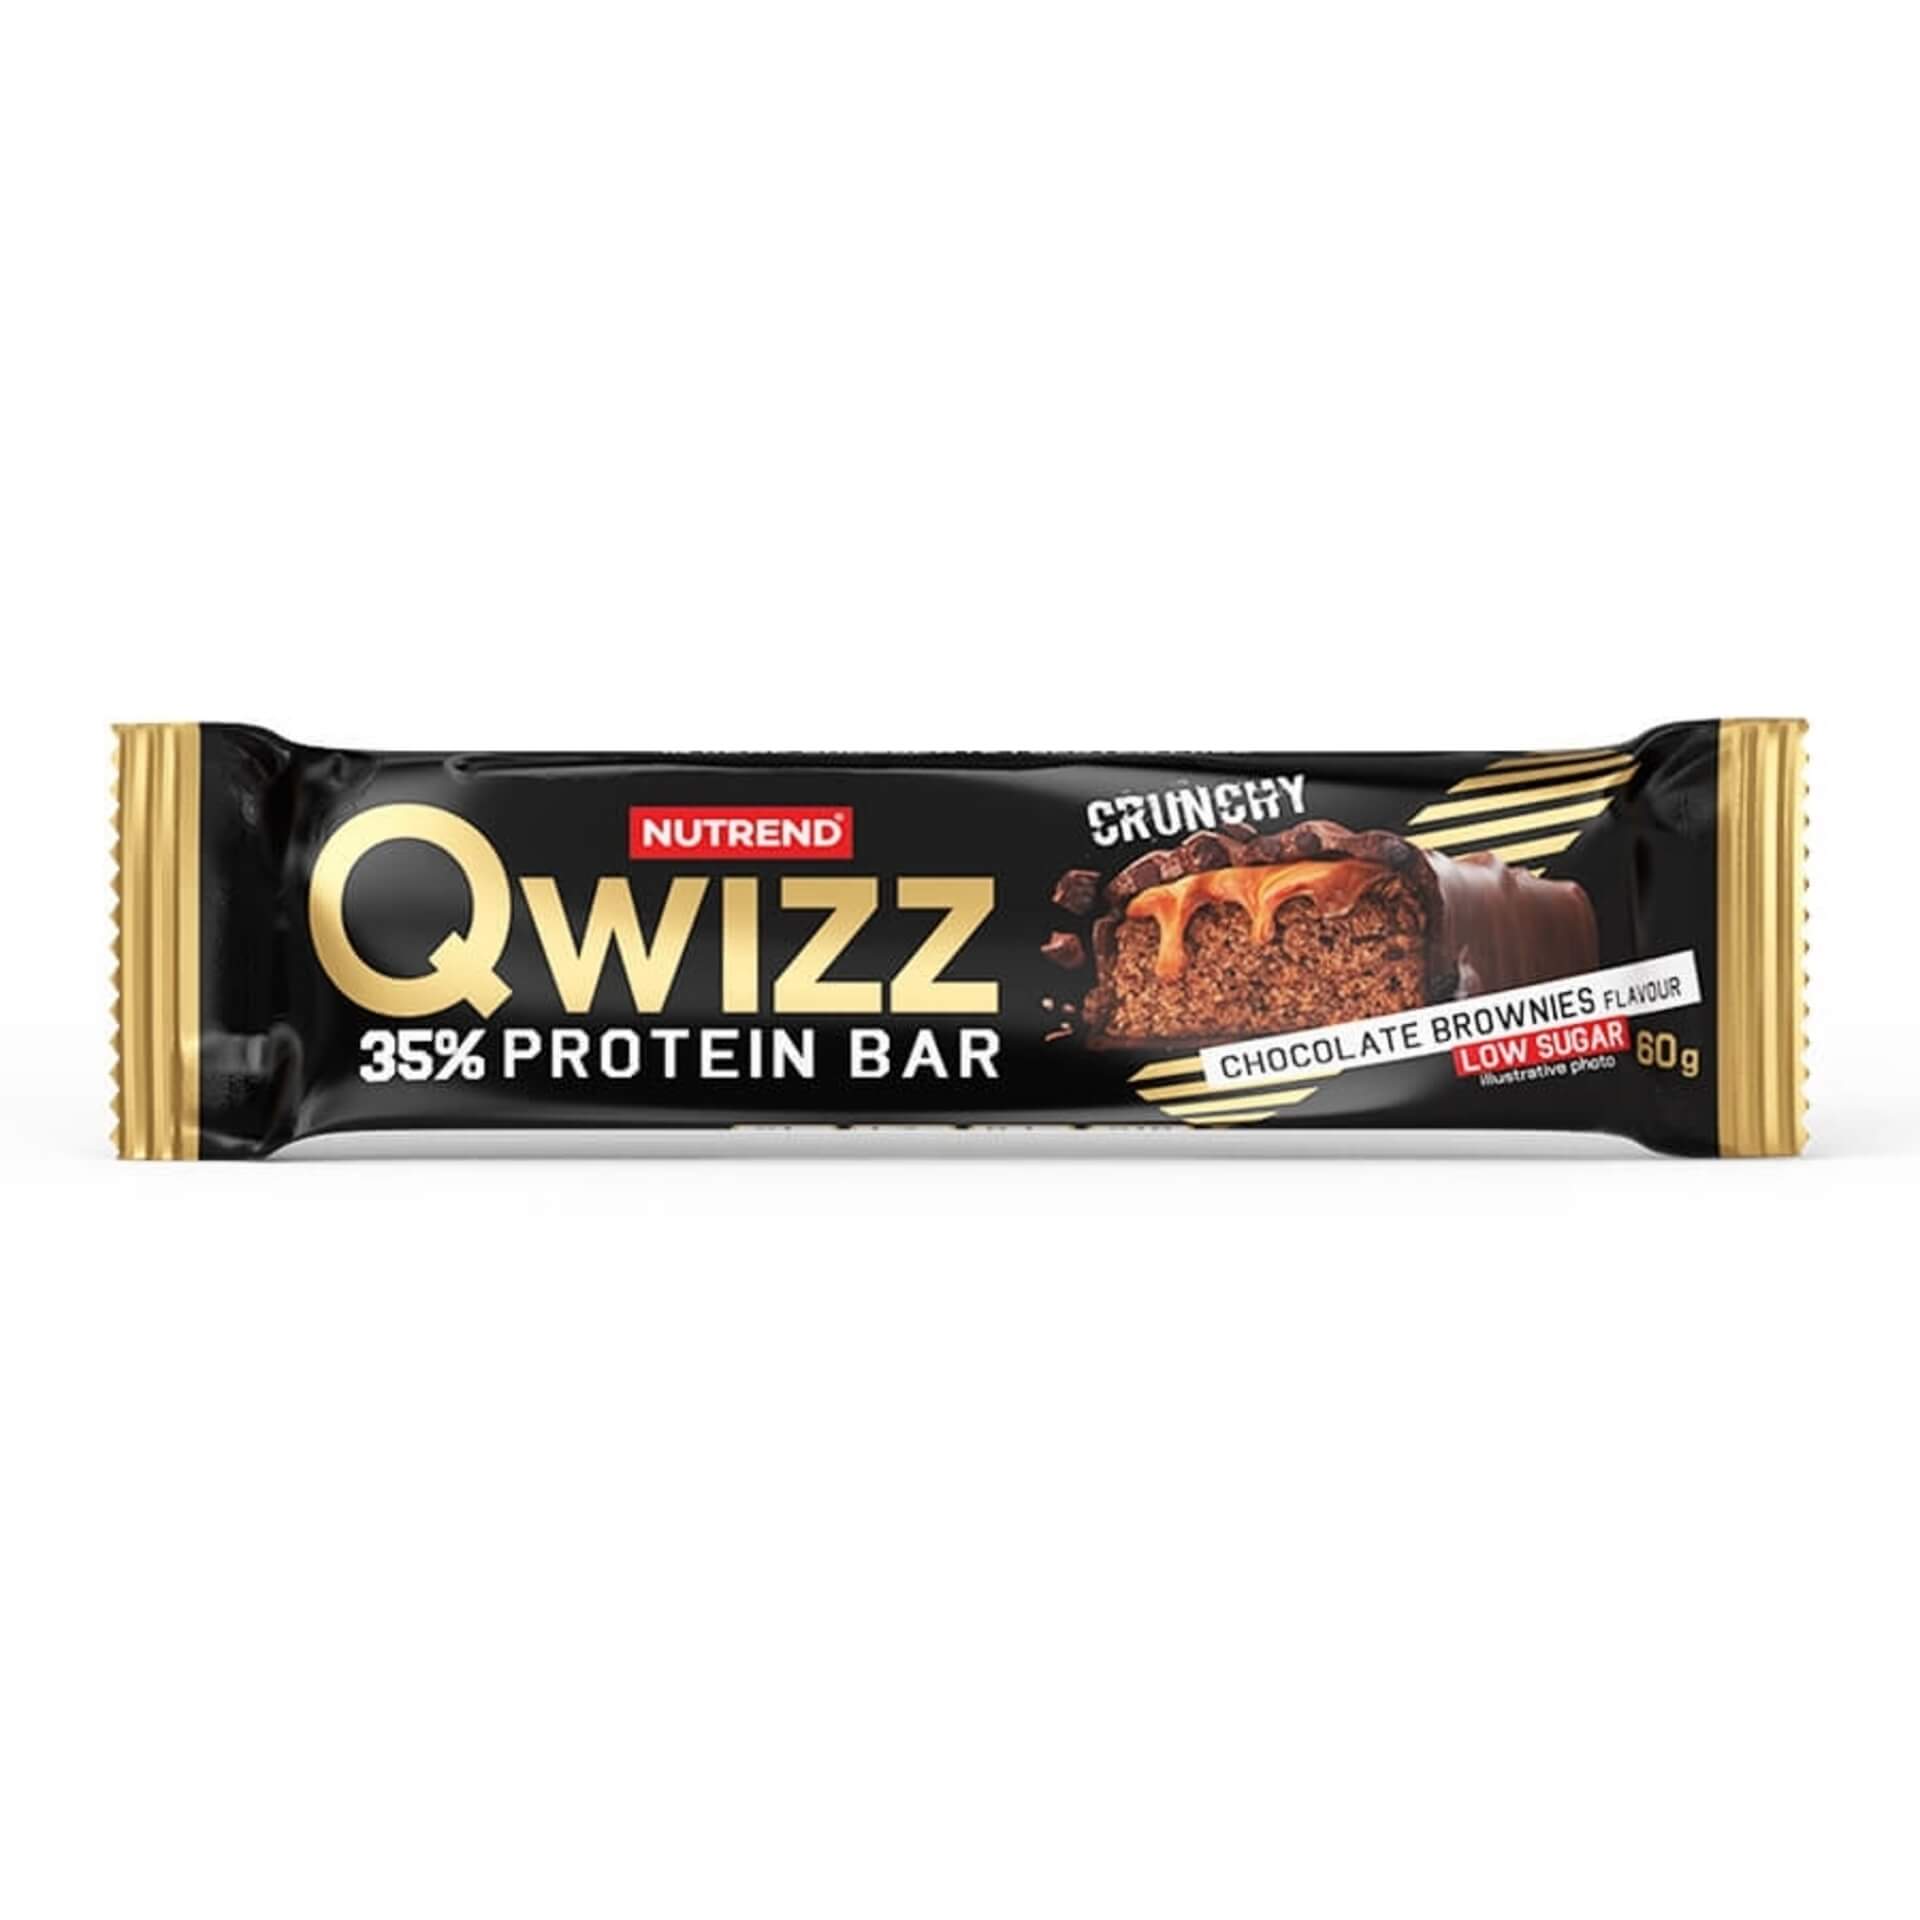 qwizz-protein-bar-2021-chocolate-brownies